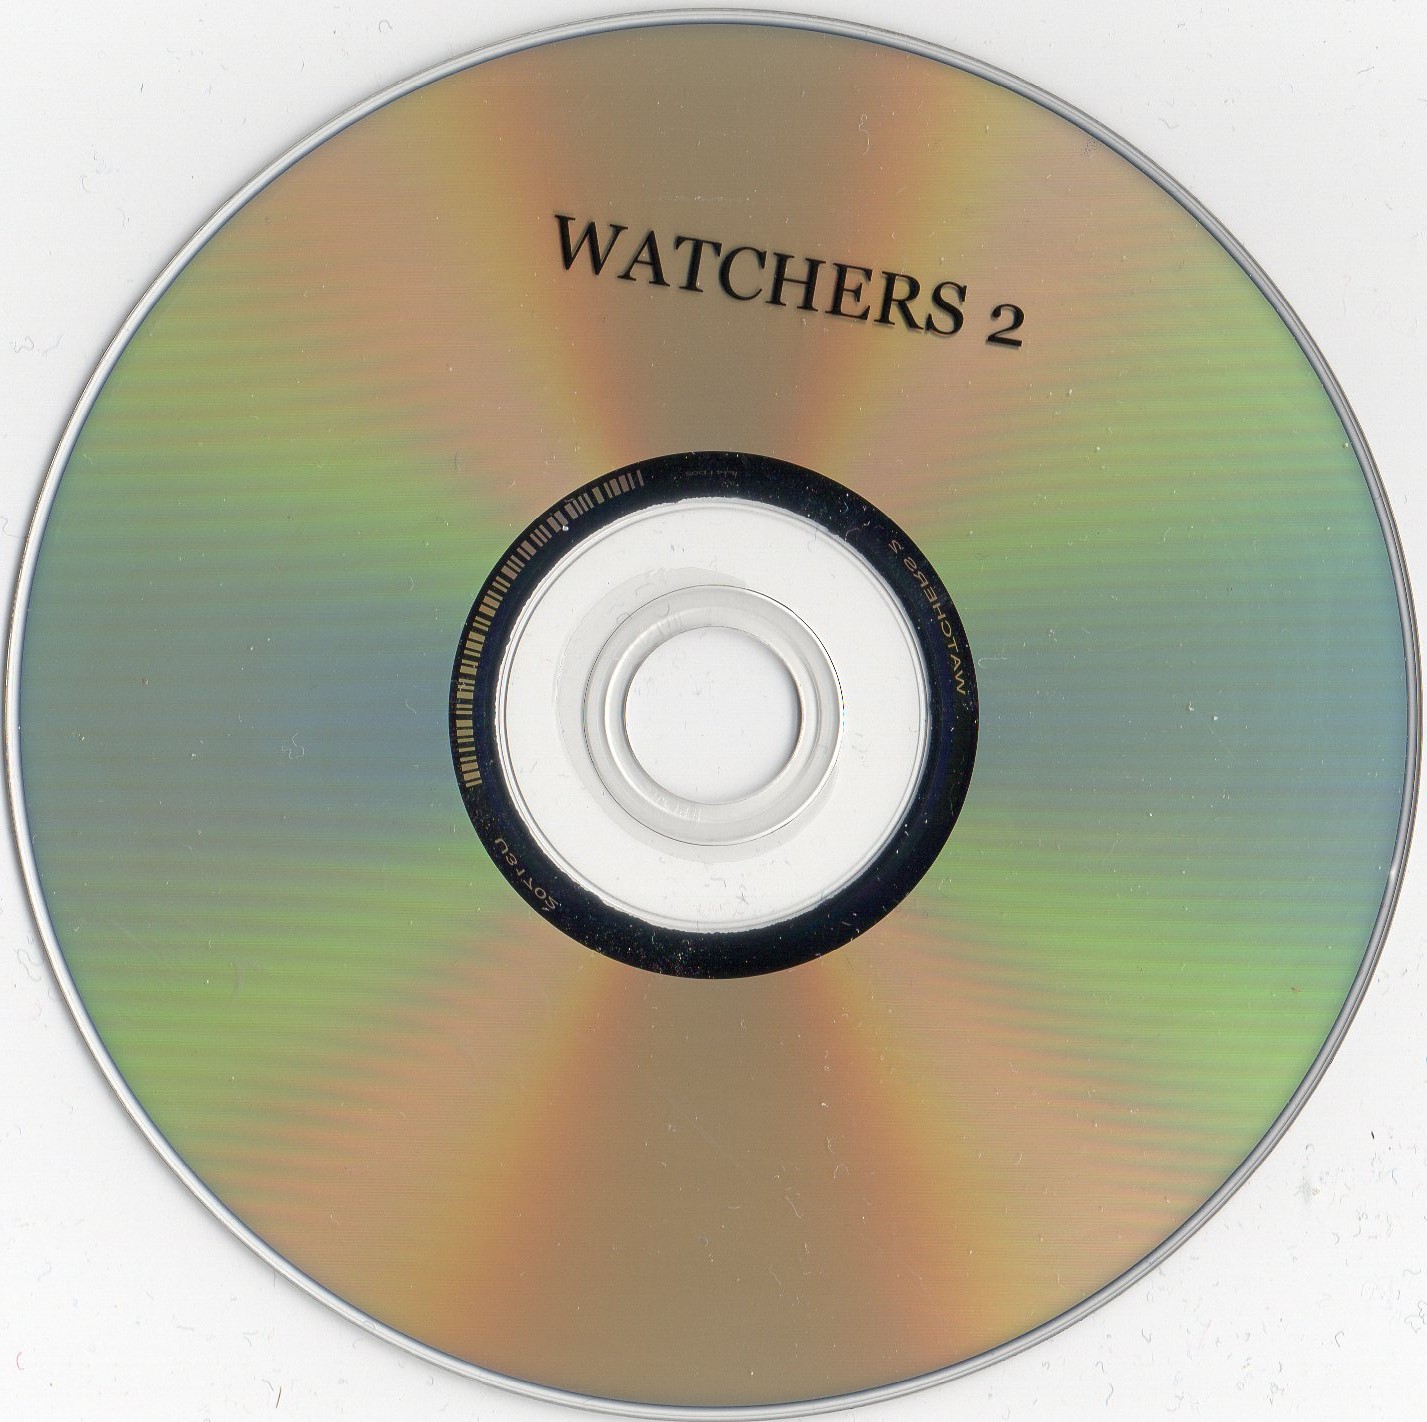 Watchers 2